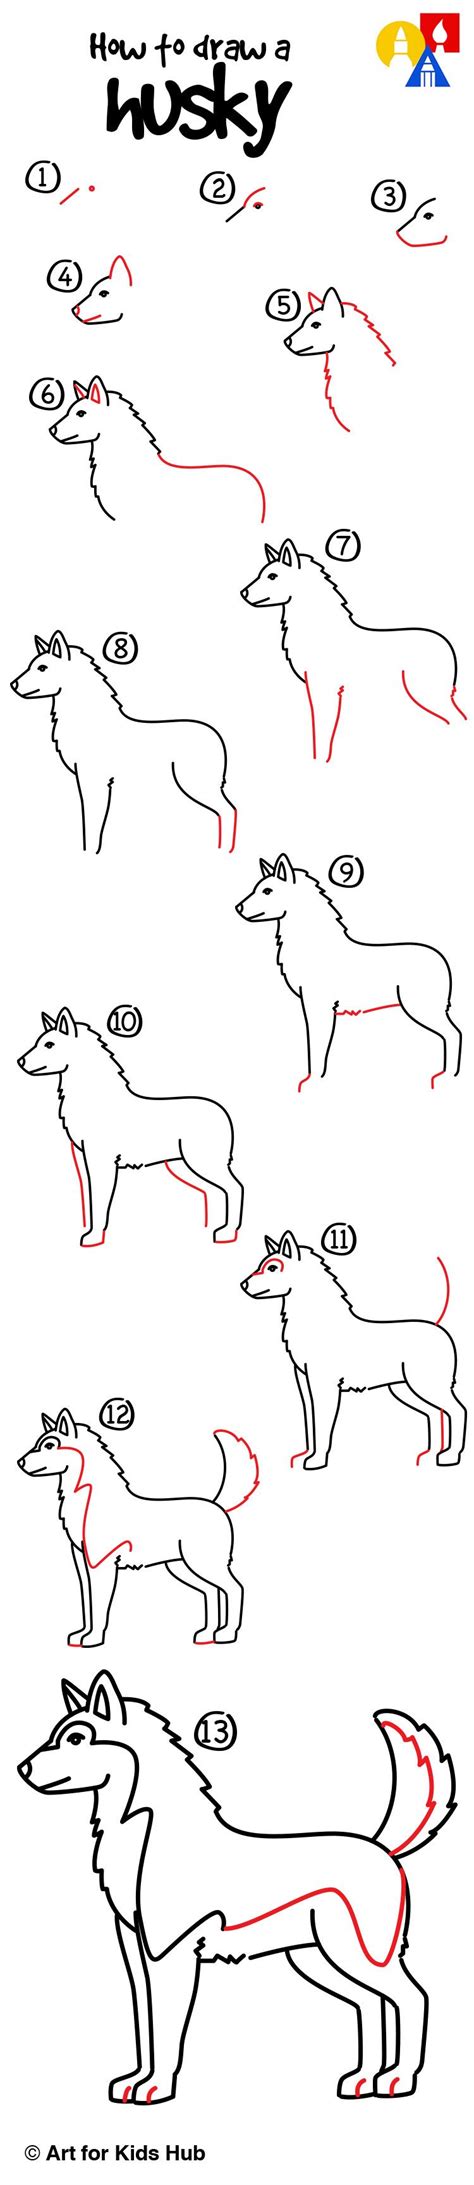 How To Draw A Husky Dog Step By Step Easy Tokhow